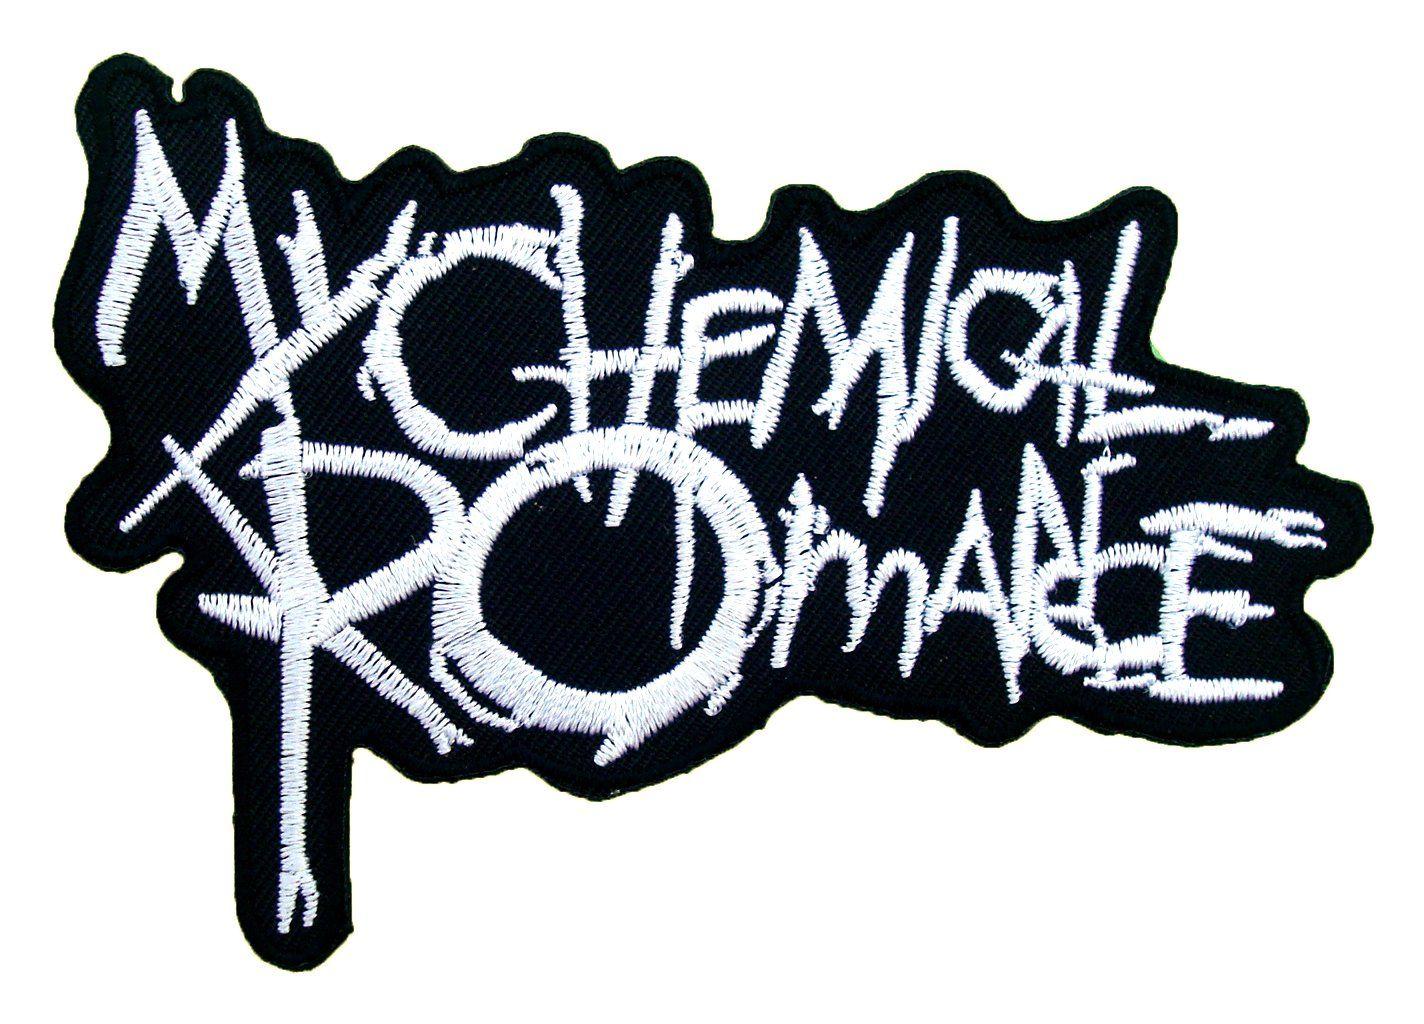 Best Rock Band Logo - Amazon.com: 1 X My Chemical Romance Rock Band Logo T Shirts MM33 ...